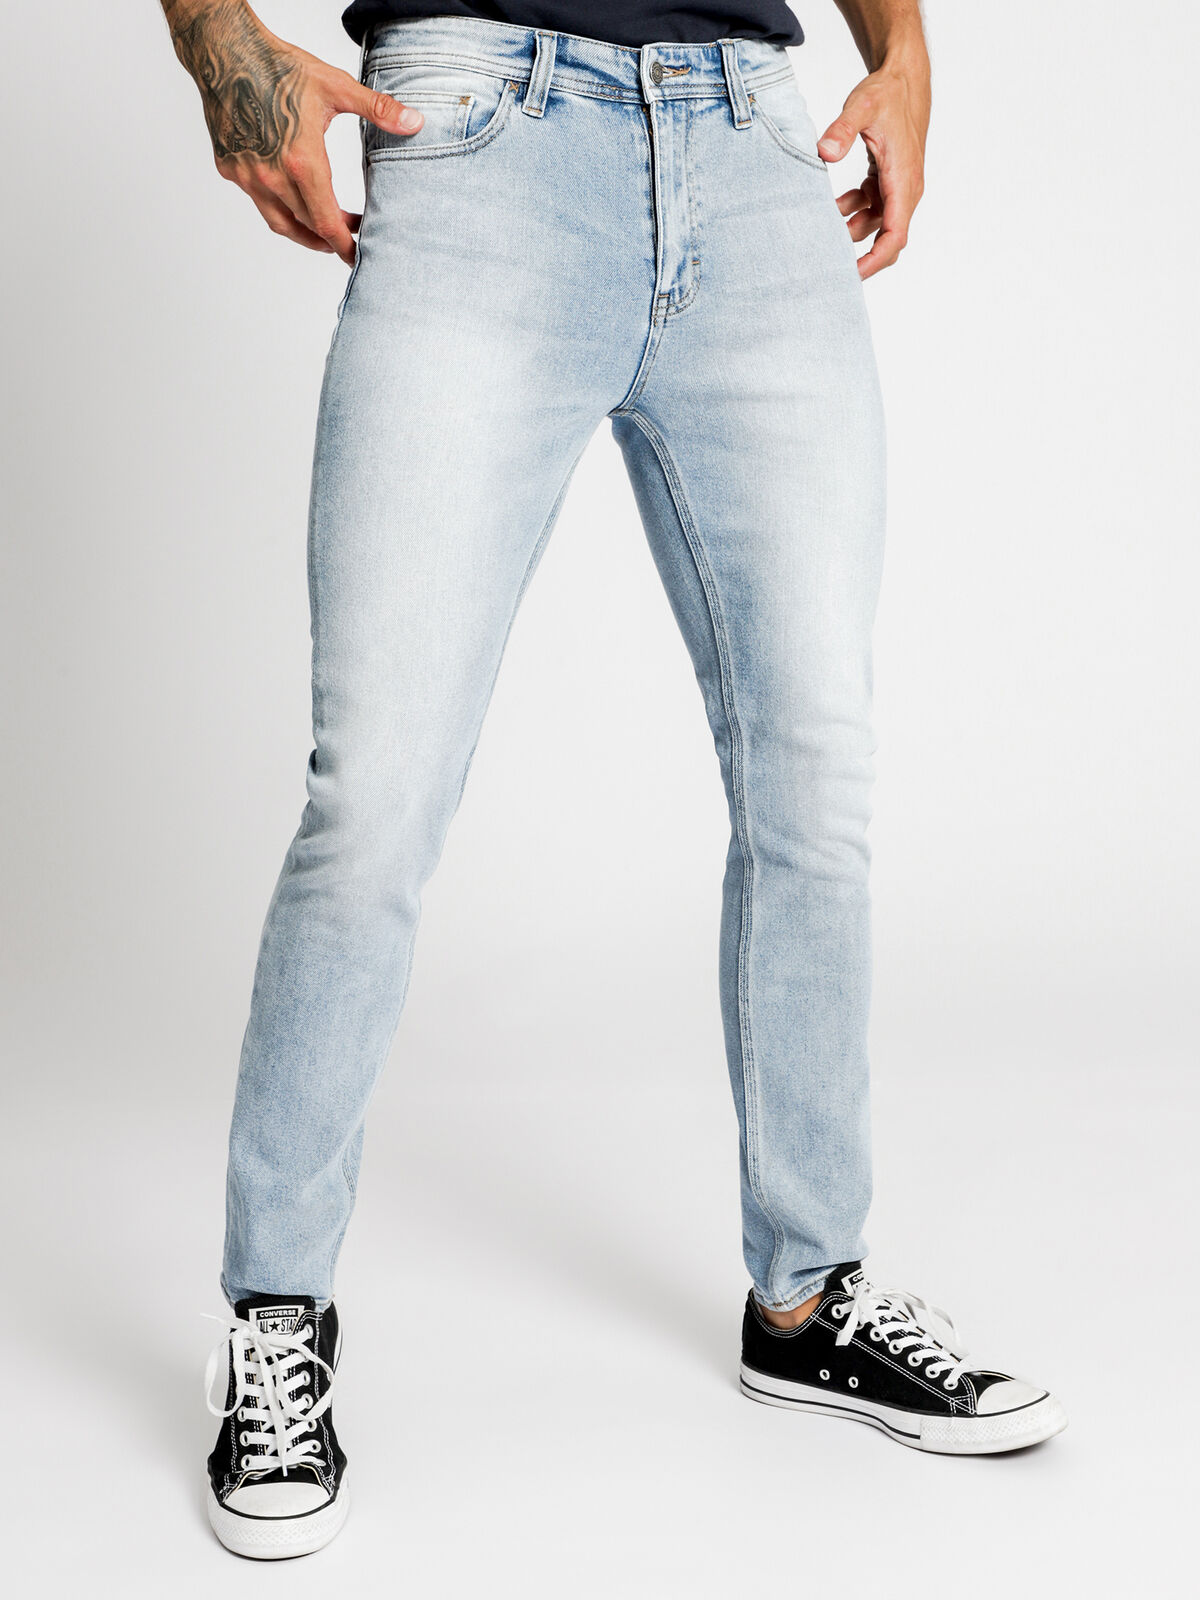 Z-One Slim Tapered Leg Jeans in Corsair Blue Denim